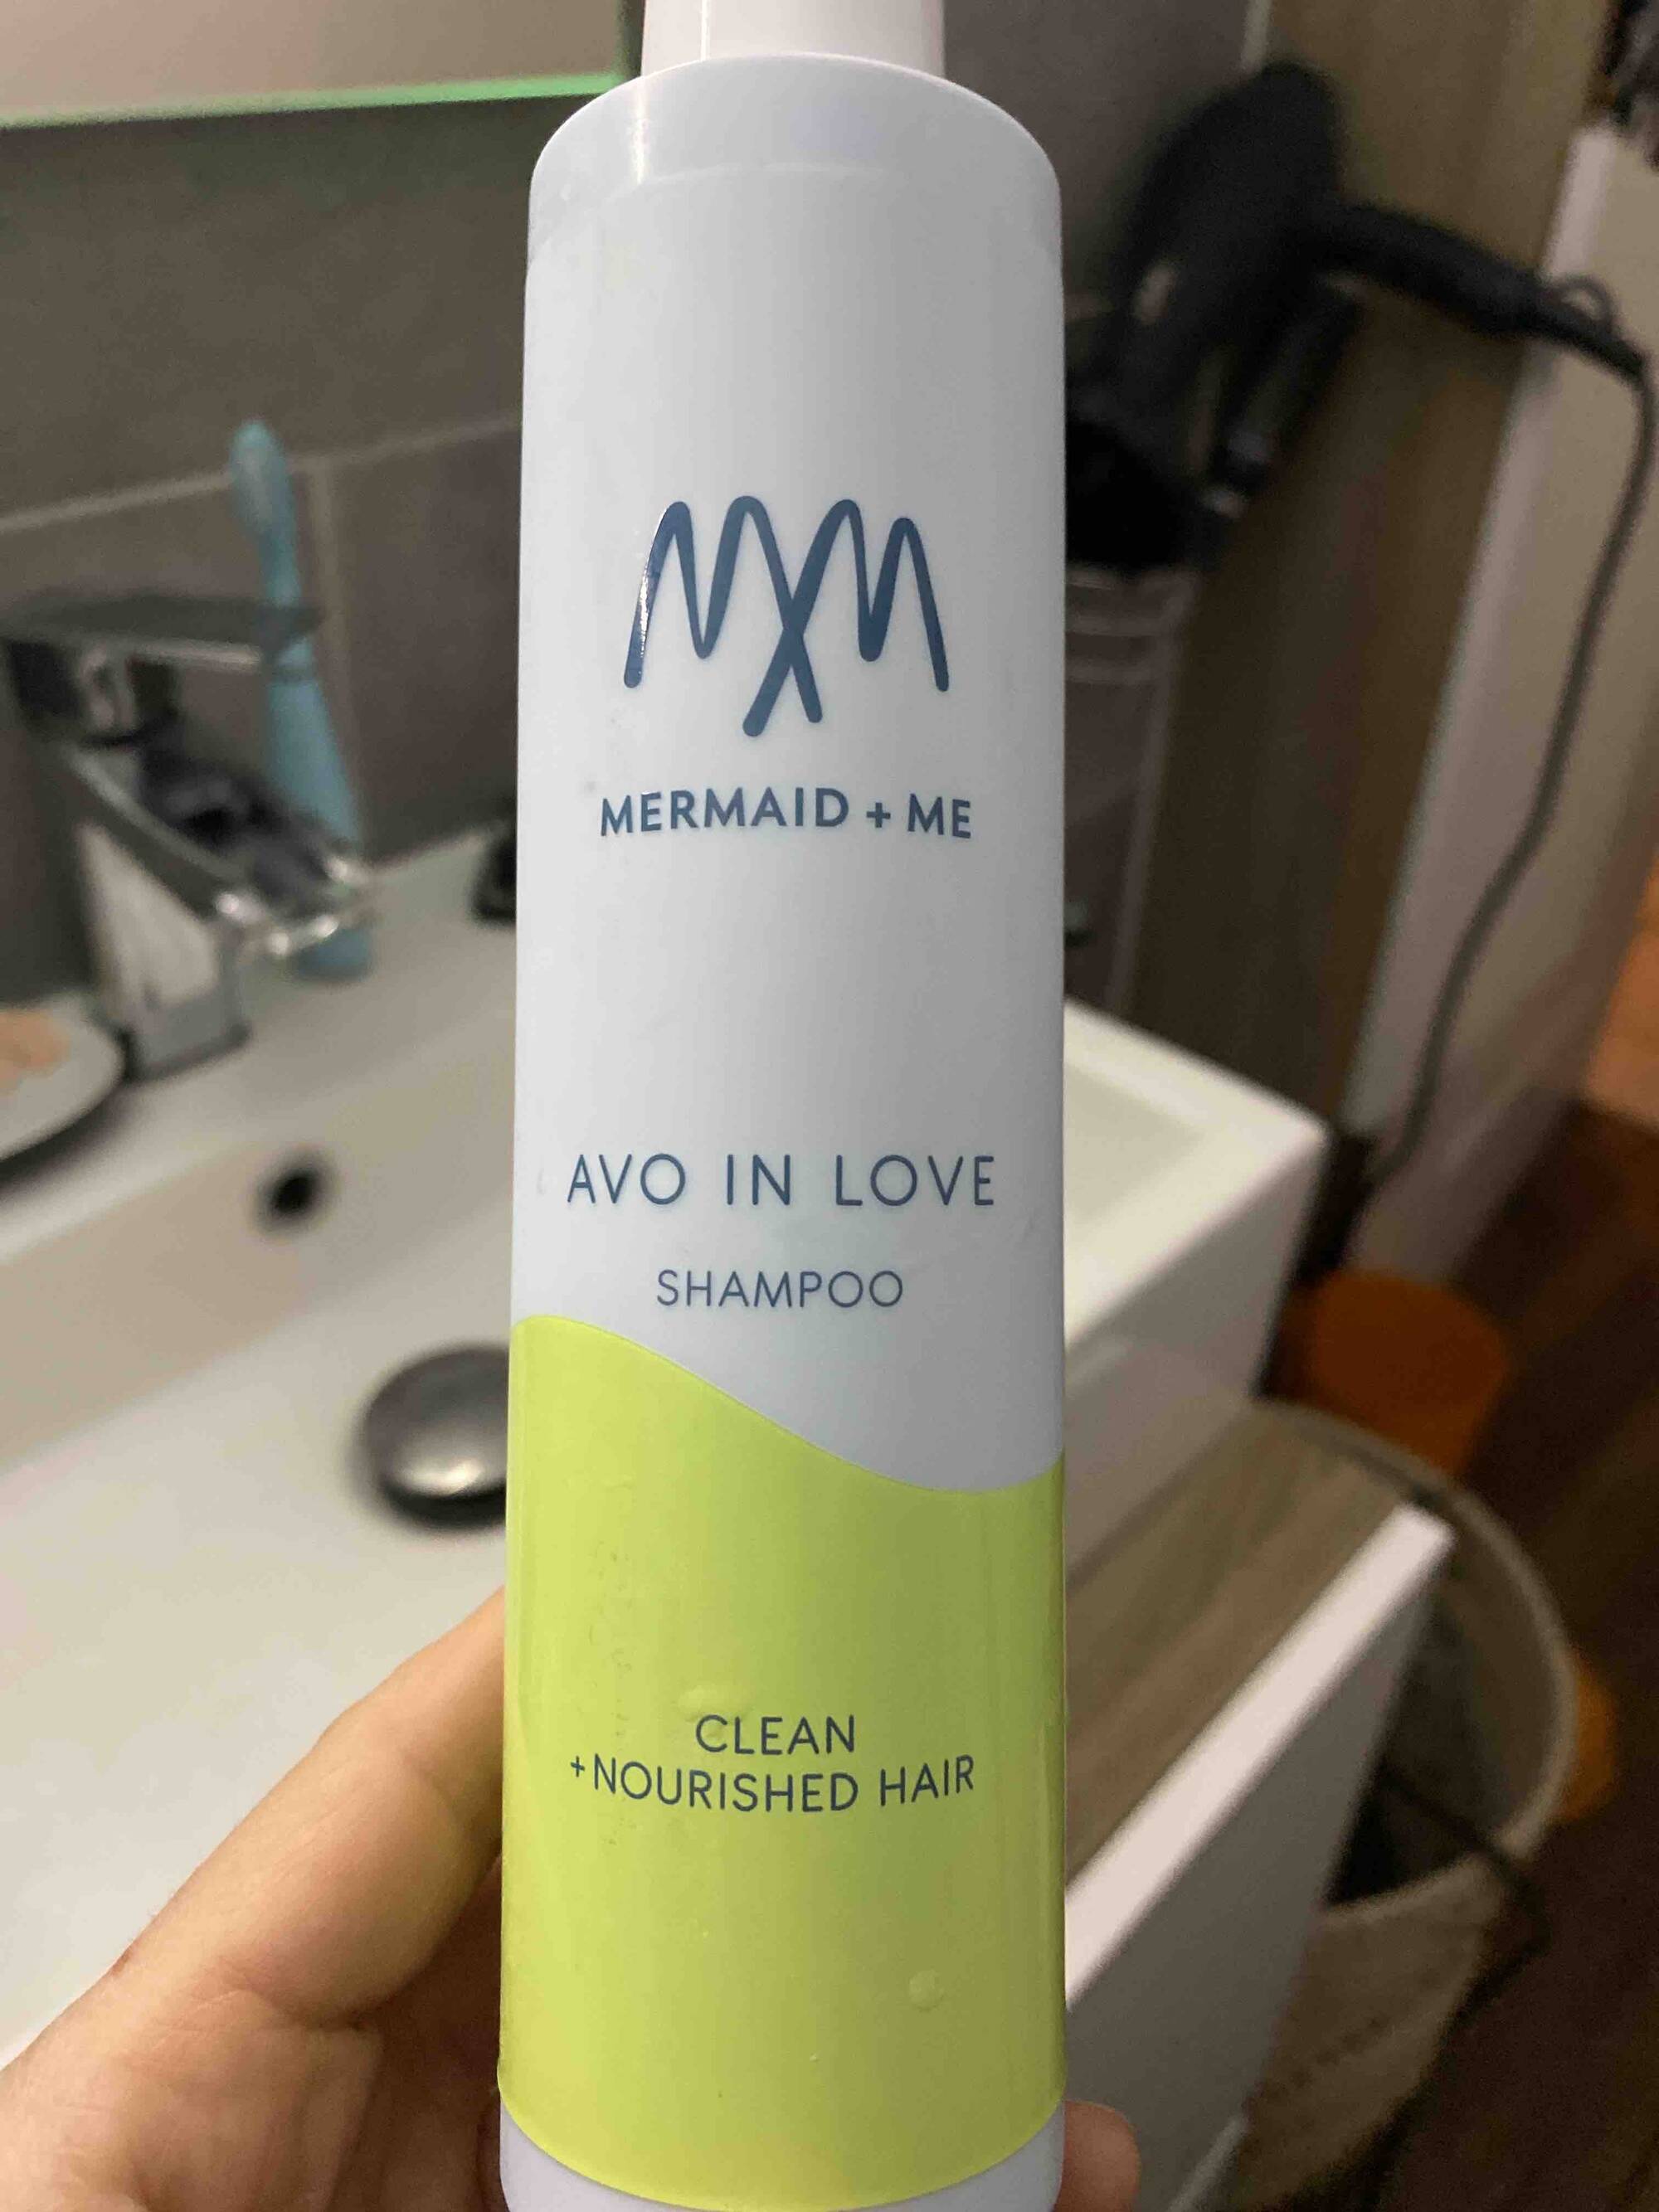 MERMAID + ME - Avo in love - Shampoo